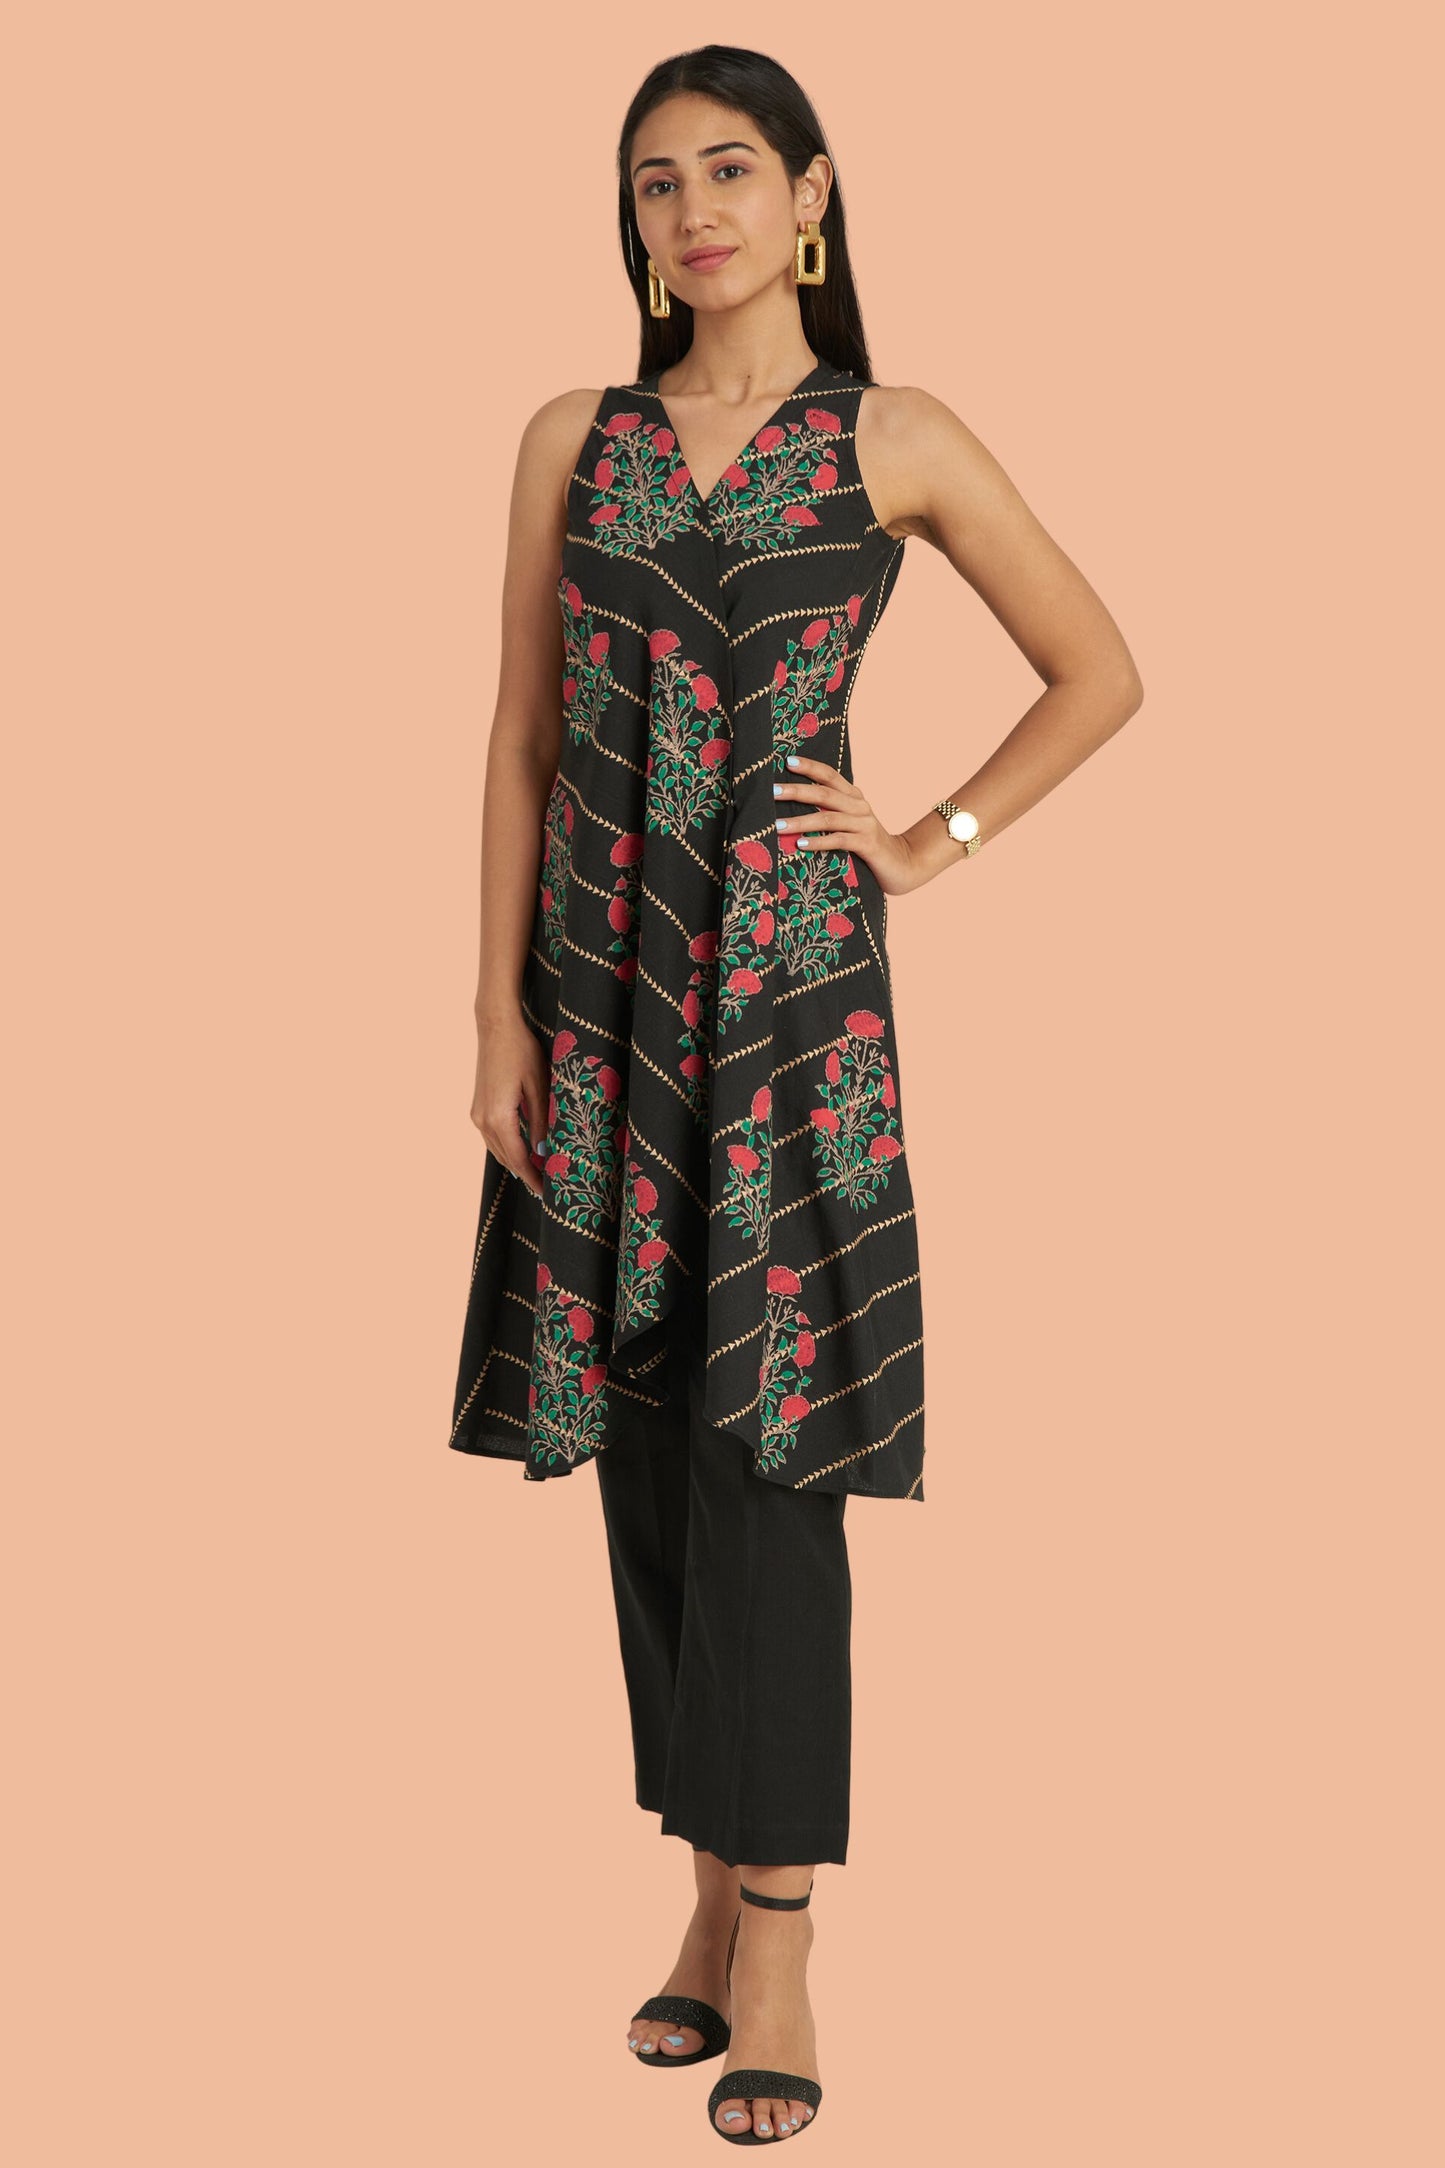 Women Indian Kurti Kurta Stylish Black Chiffon With Linning Embroidered  Short Tunic Tops Shirt Ethnic Dress - Etsy